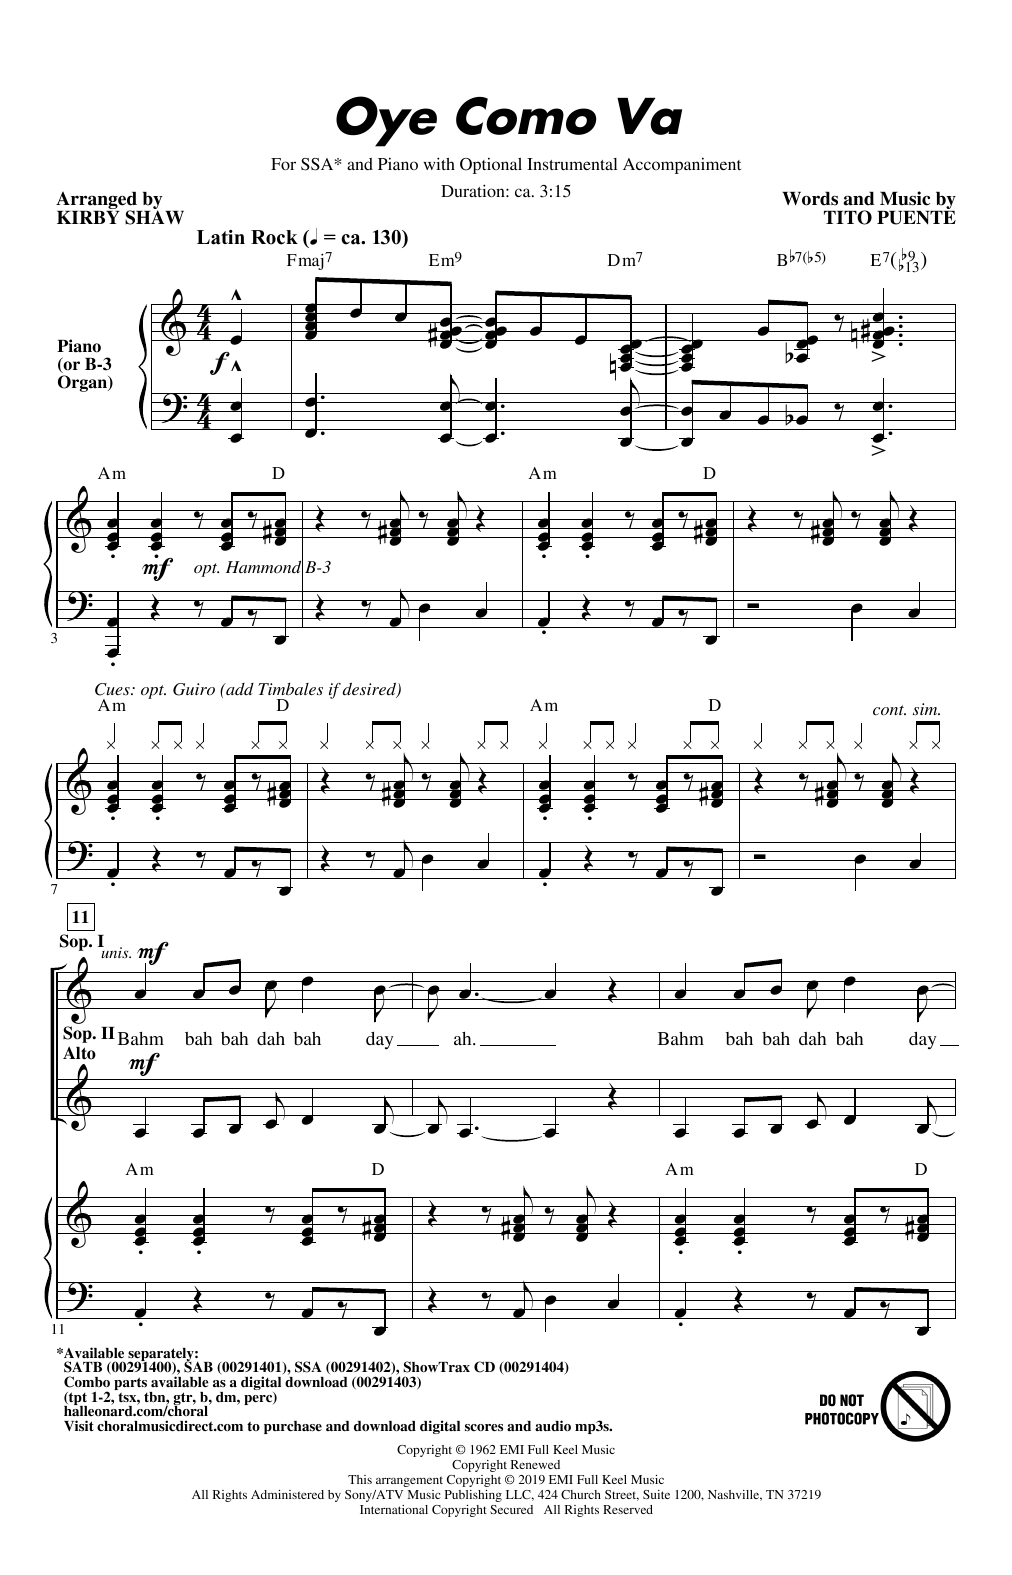 Santana Oye Como Va (arr. Kirby Shaw) Sheet Music Notes & Chords for SSA Choir - Download or Print PDF